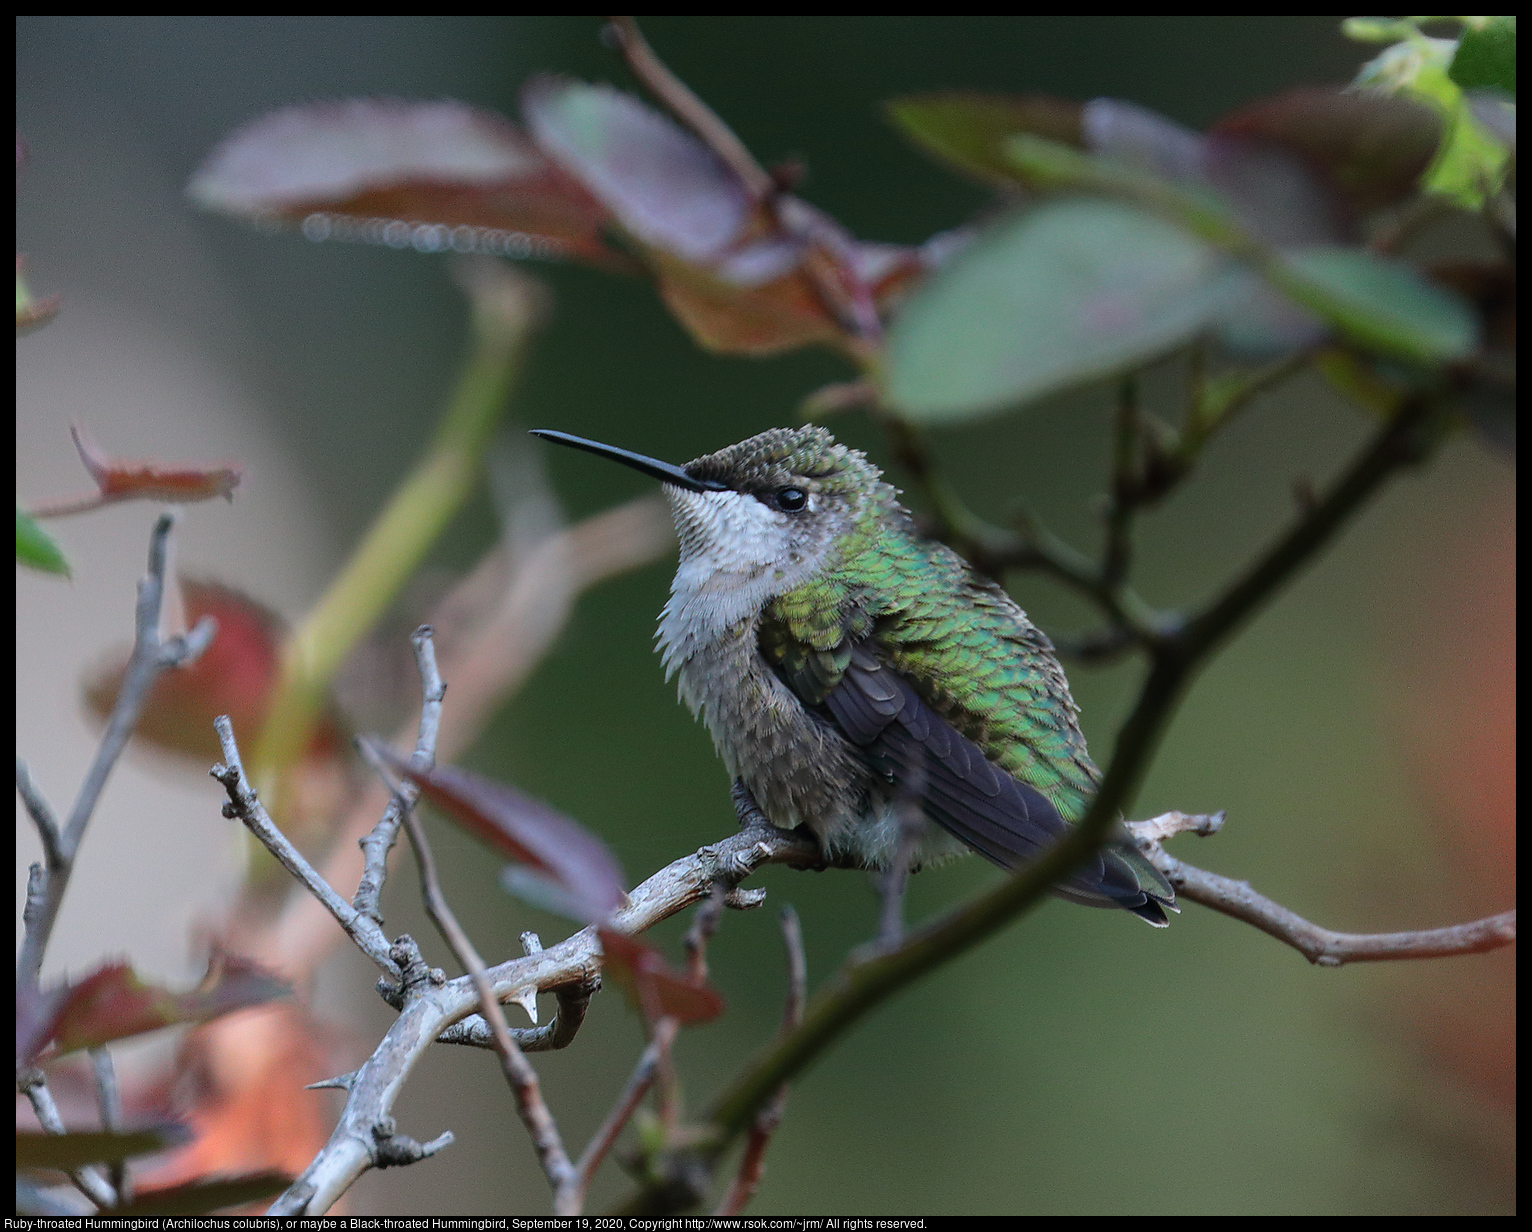 Ruby-throated Hummingbird (Archilochus colubris), or maybe a Black-throated Hummingbird, September 19, 2020